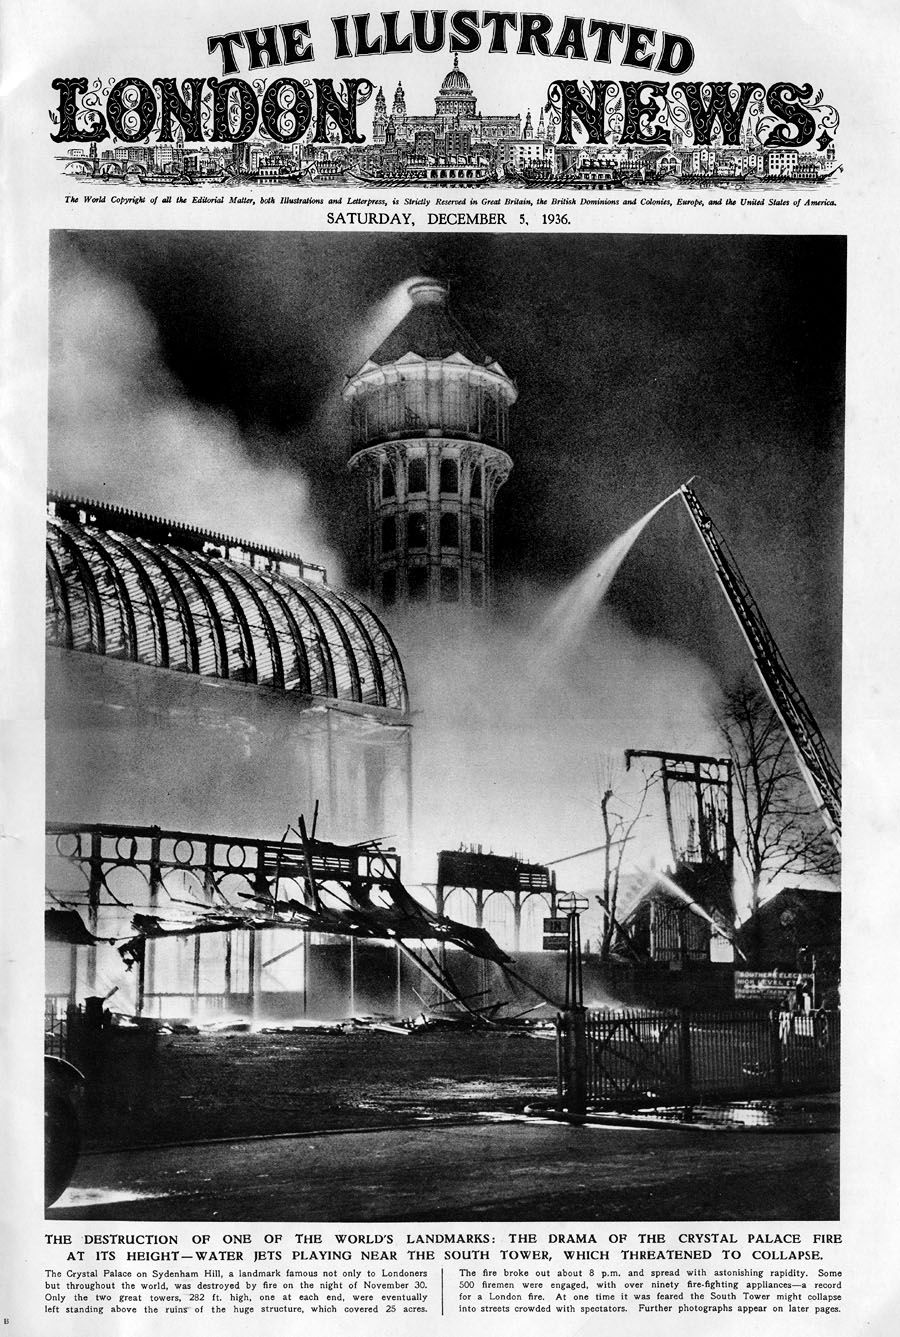 Crystal Palace fire 1936